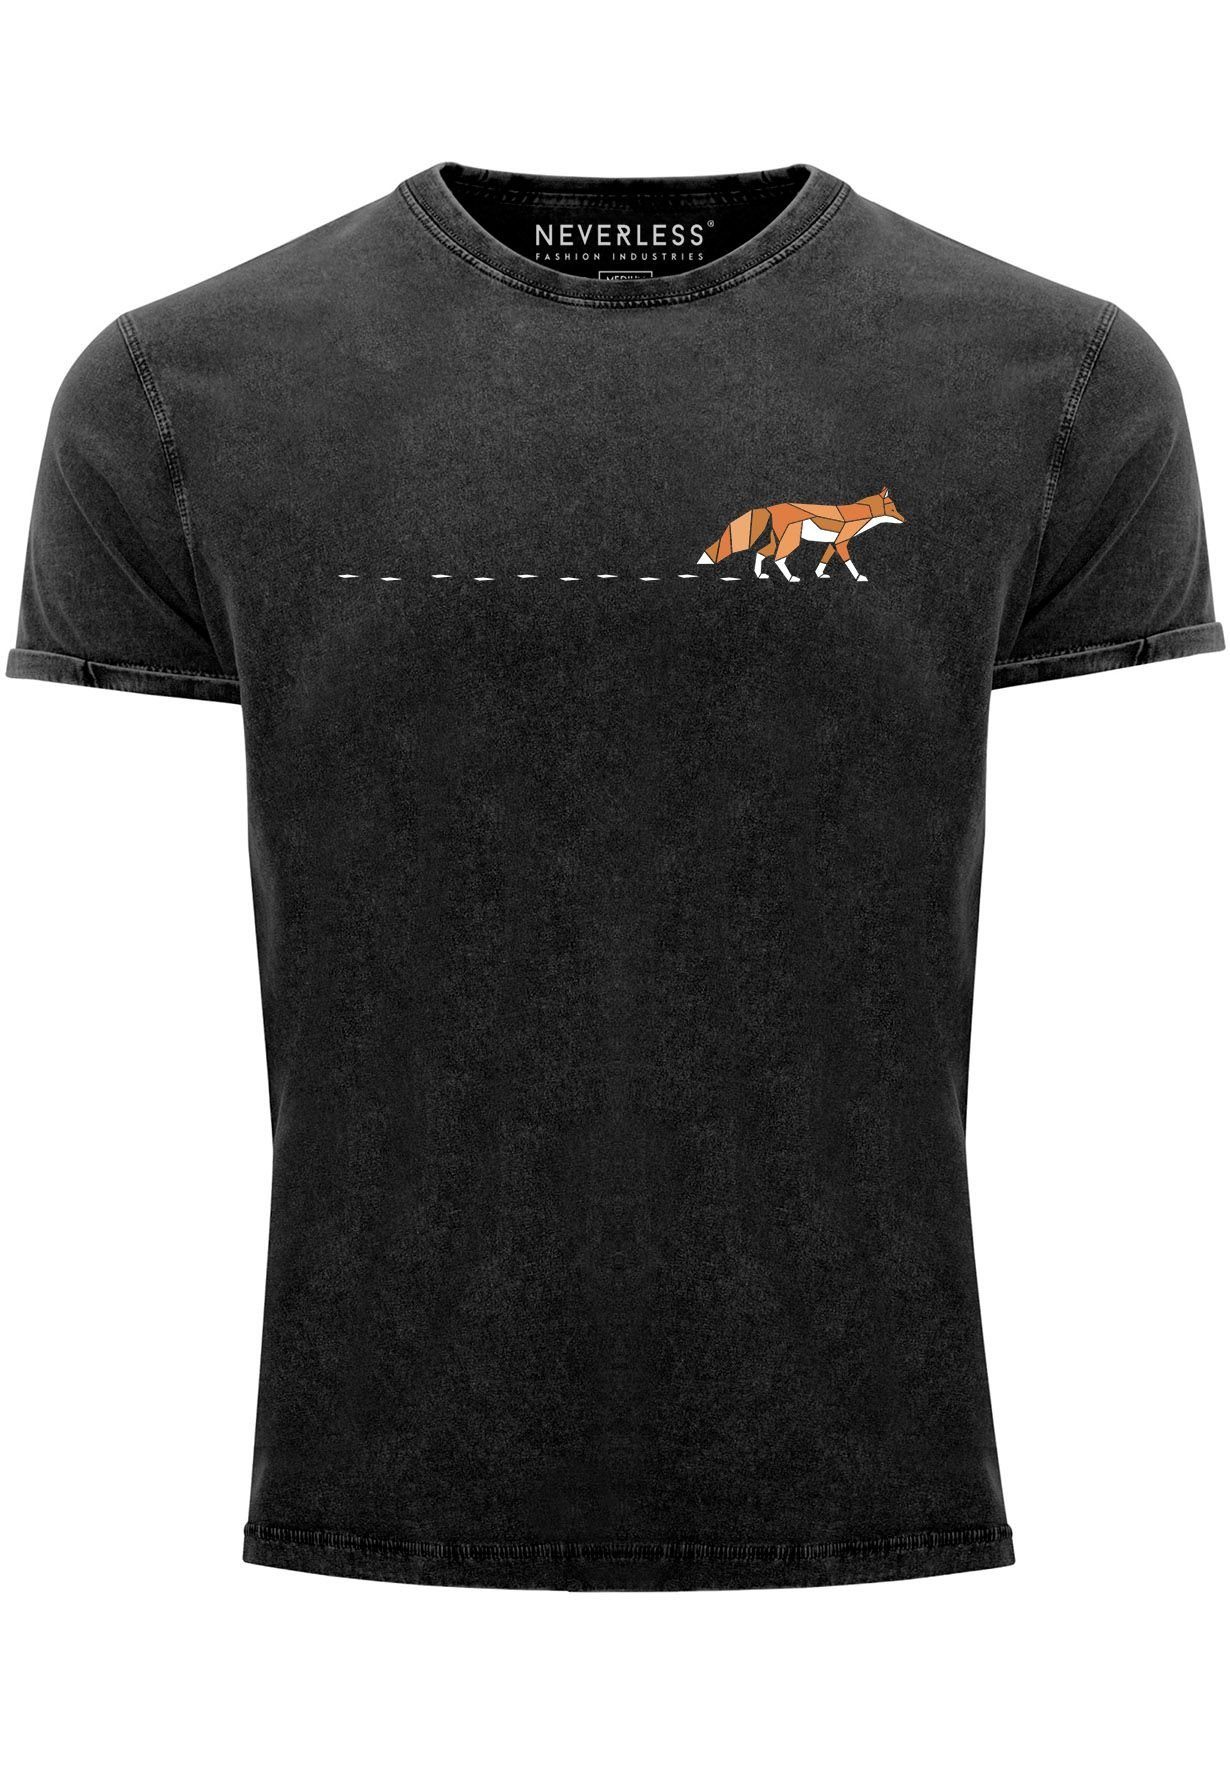 Neverless Print-Shirt Herren T-Shirt Vintage Fuchs Fox Wald Tiermotiv Logo Print Badge Fashi mit Print schwarz